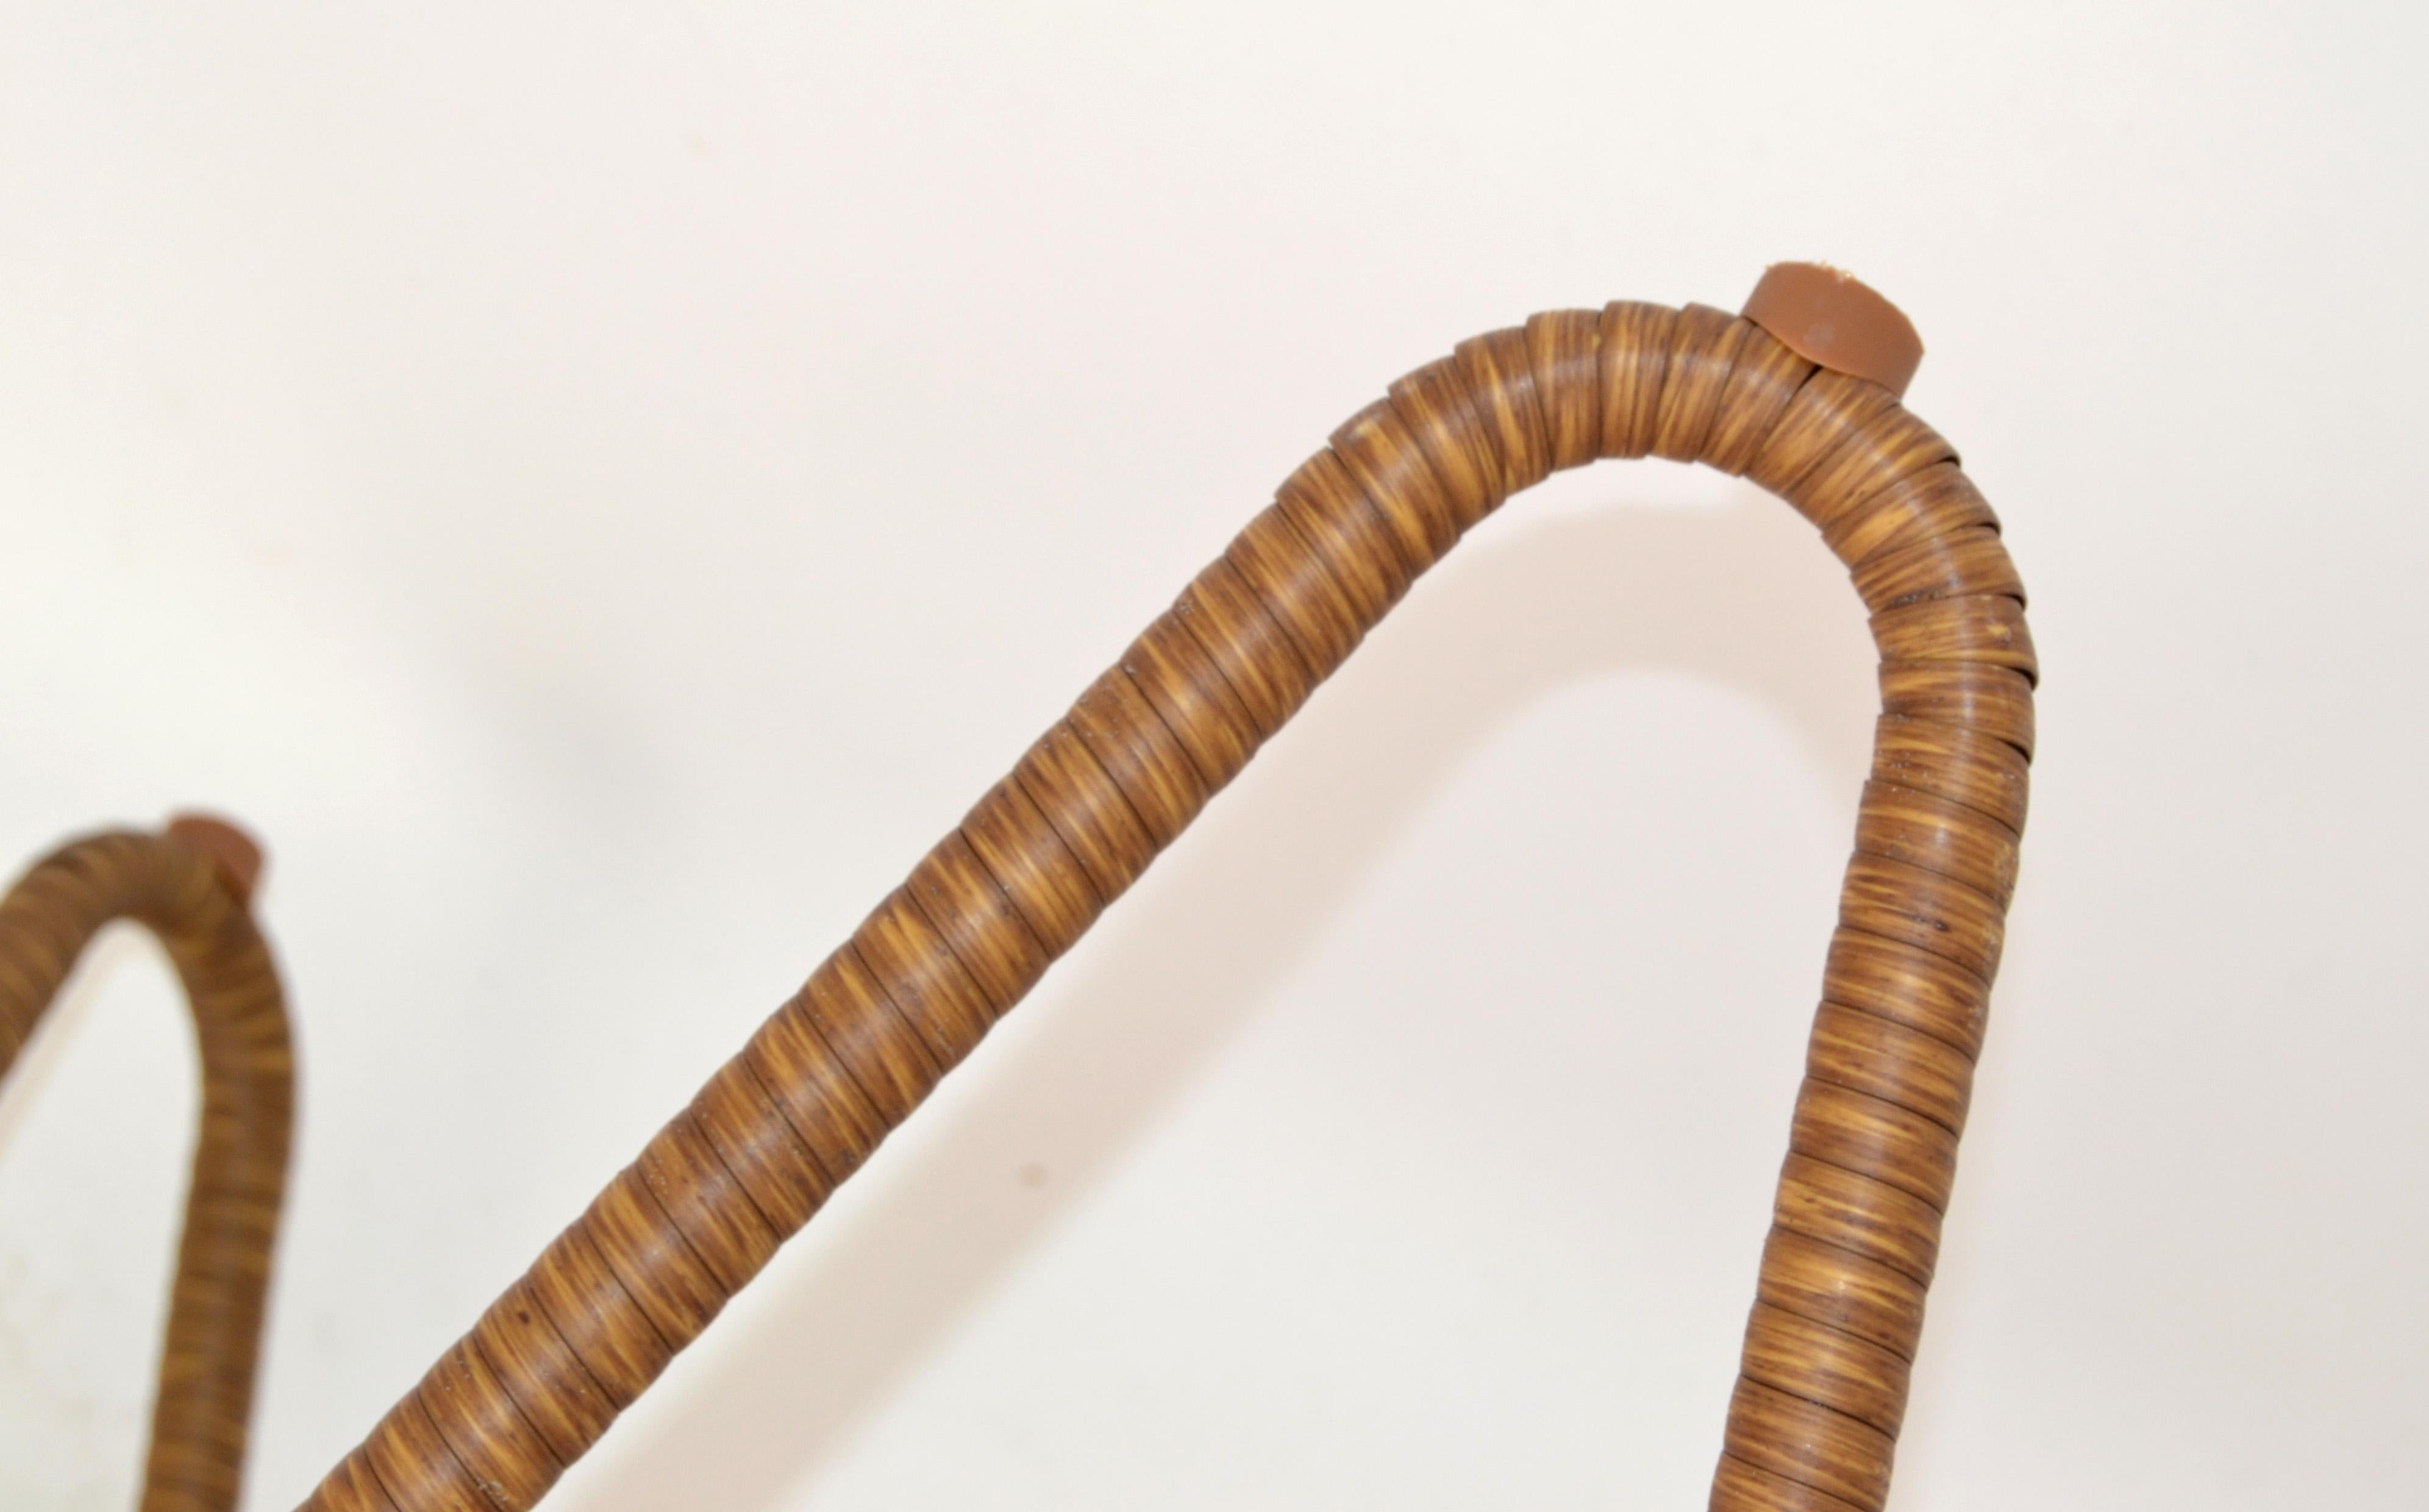 Organic Modern Sculptural 3-Legged Stool Wrought Iron Hand-Woven Cane Bindings For Sale 4